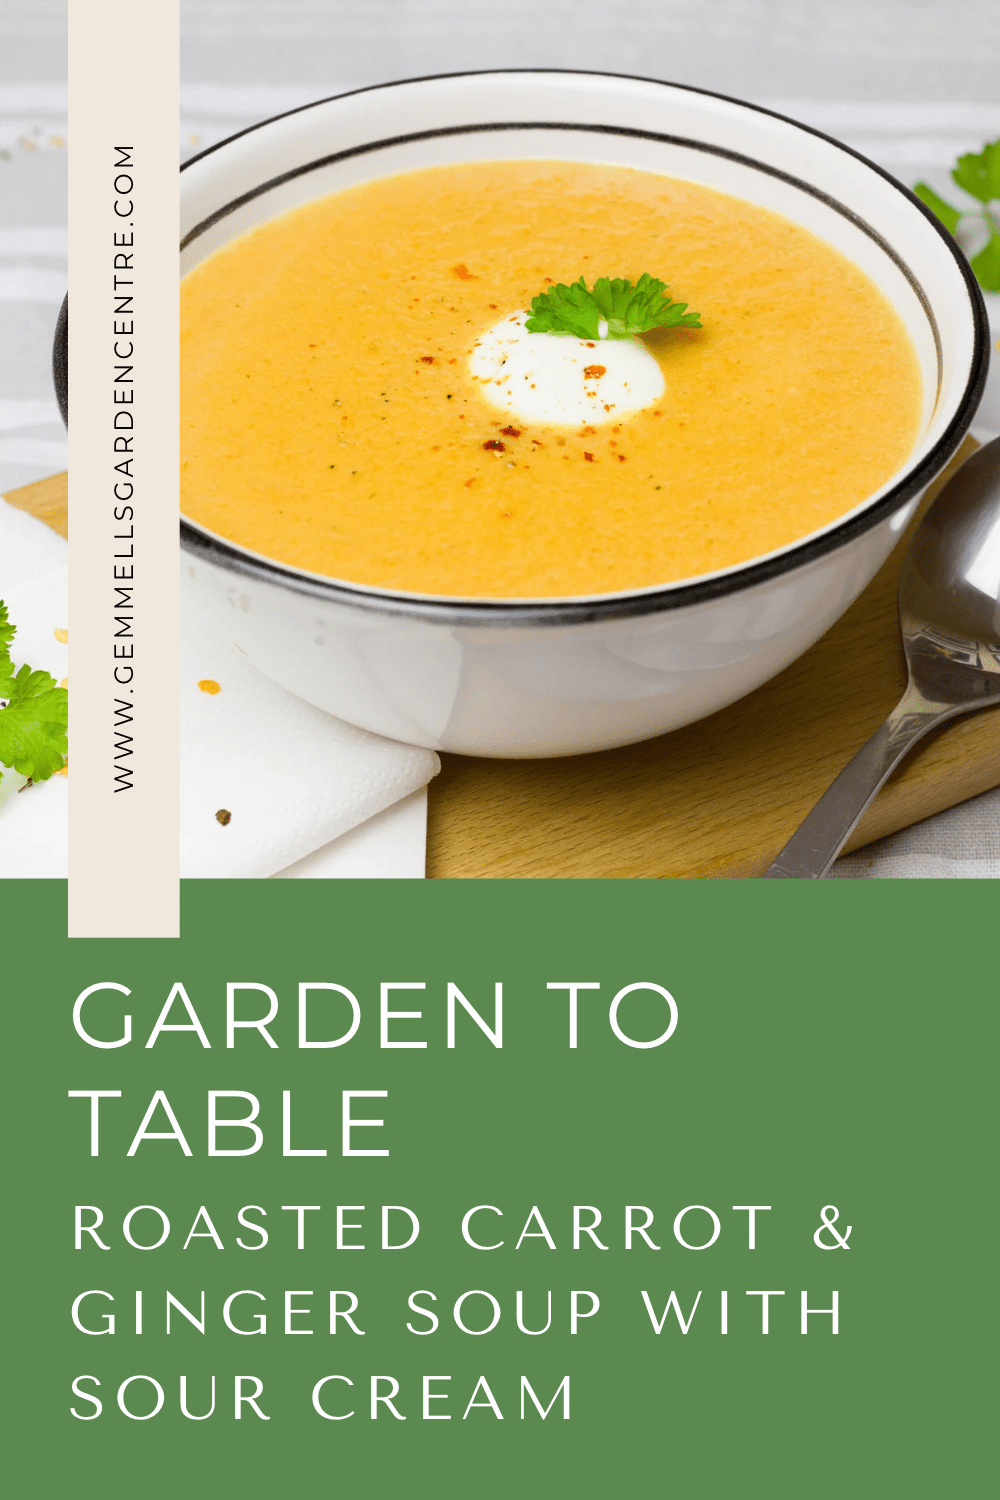 Roasted Carrot & Ginger Soup with Sour Cream Gemmells Garden Centre